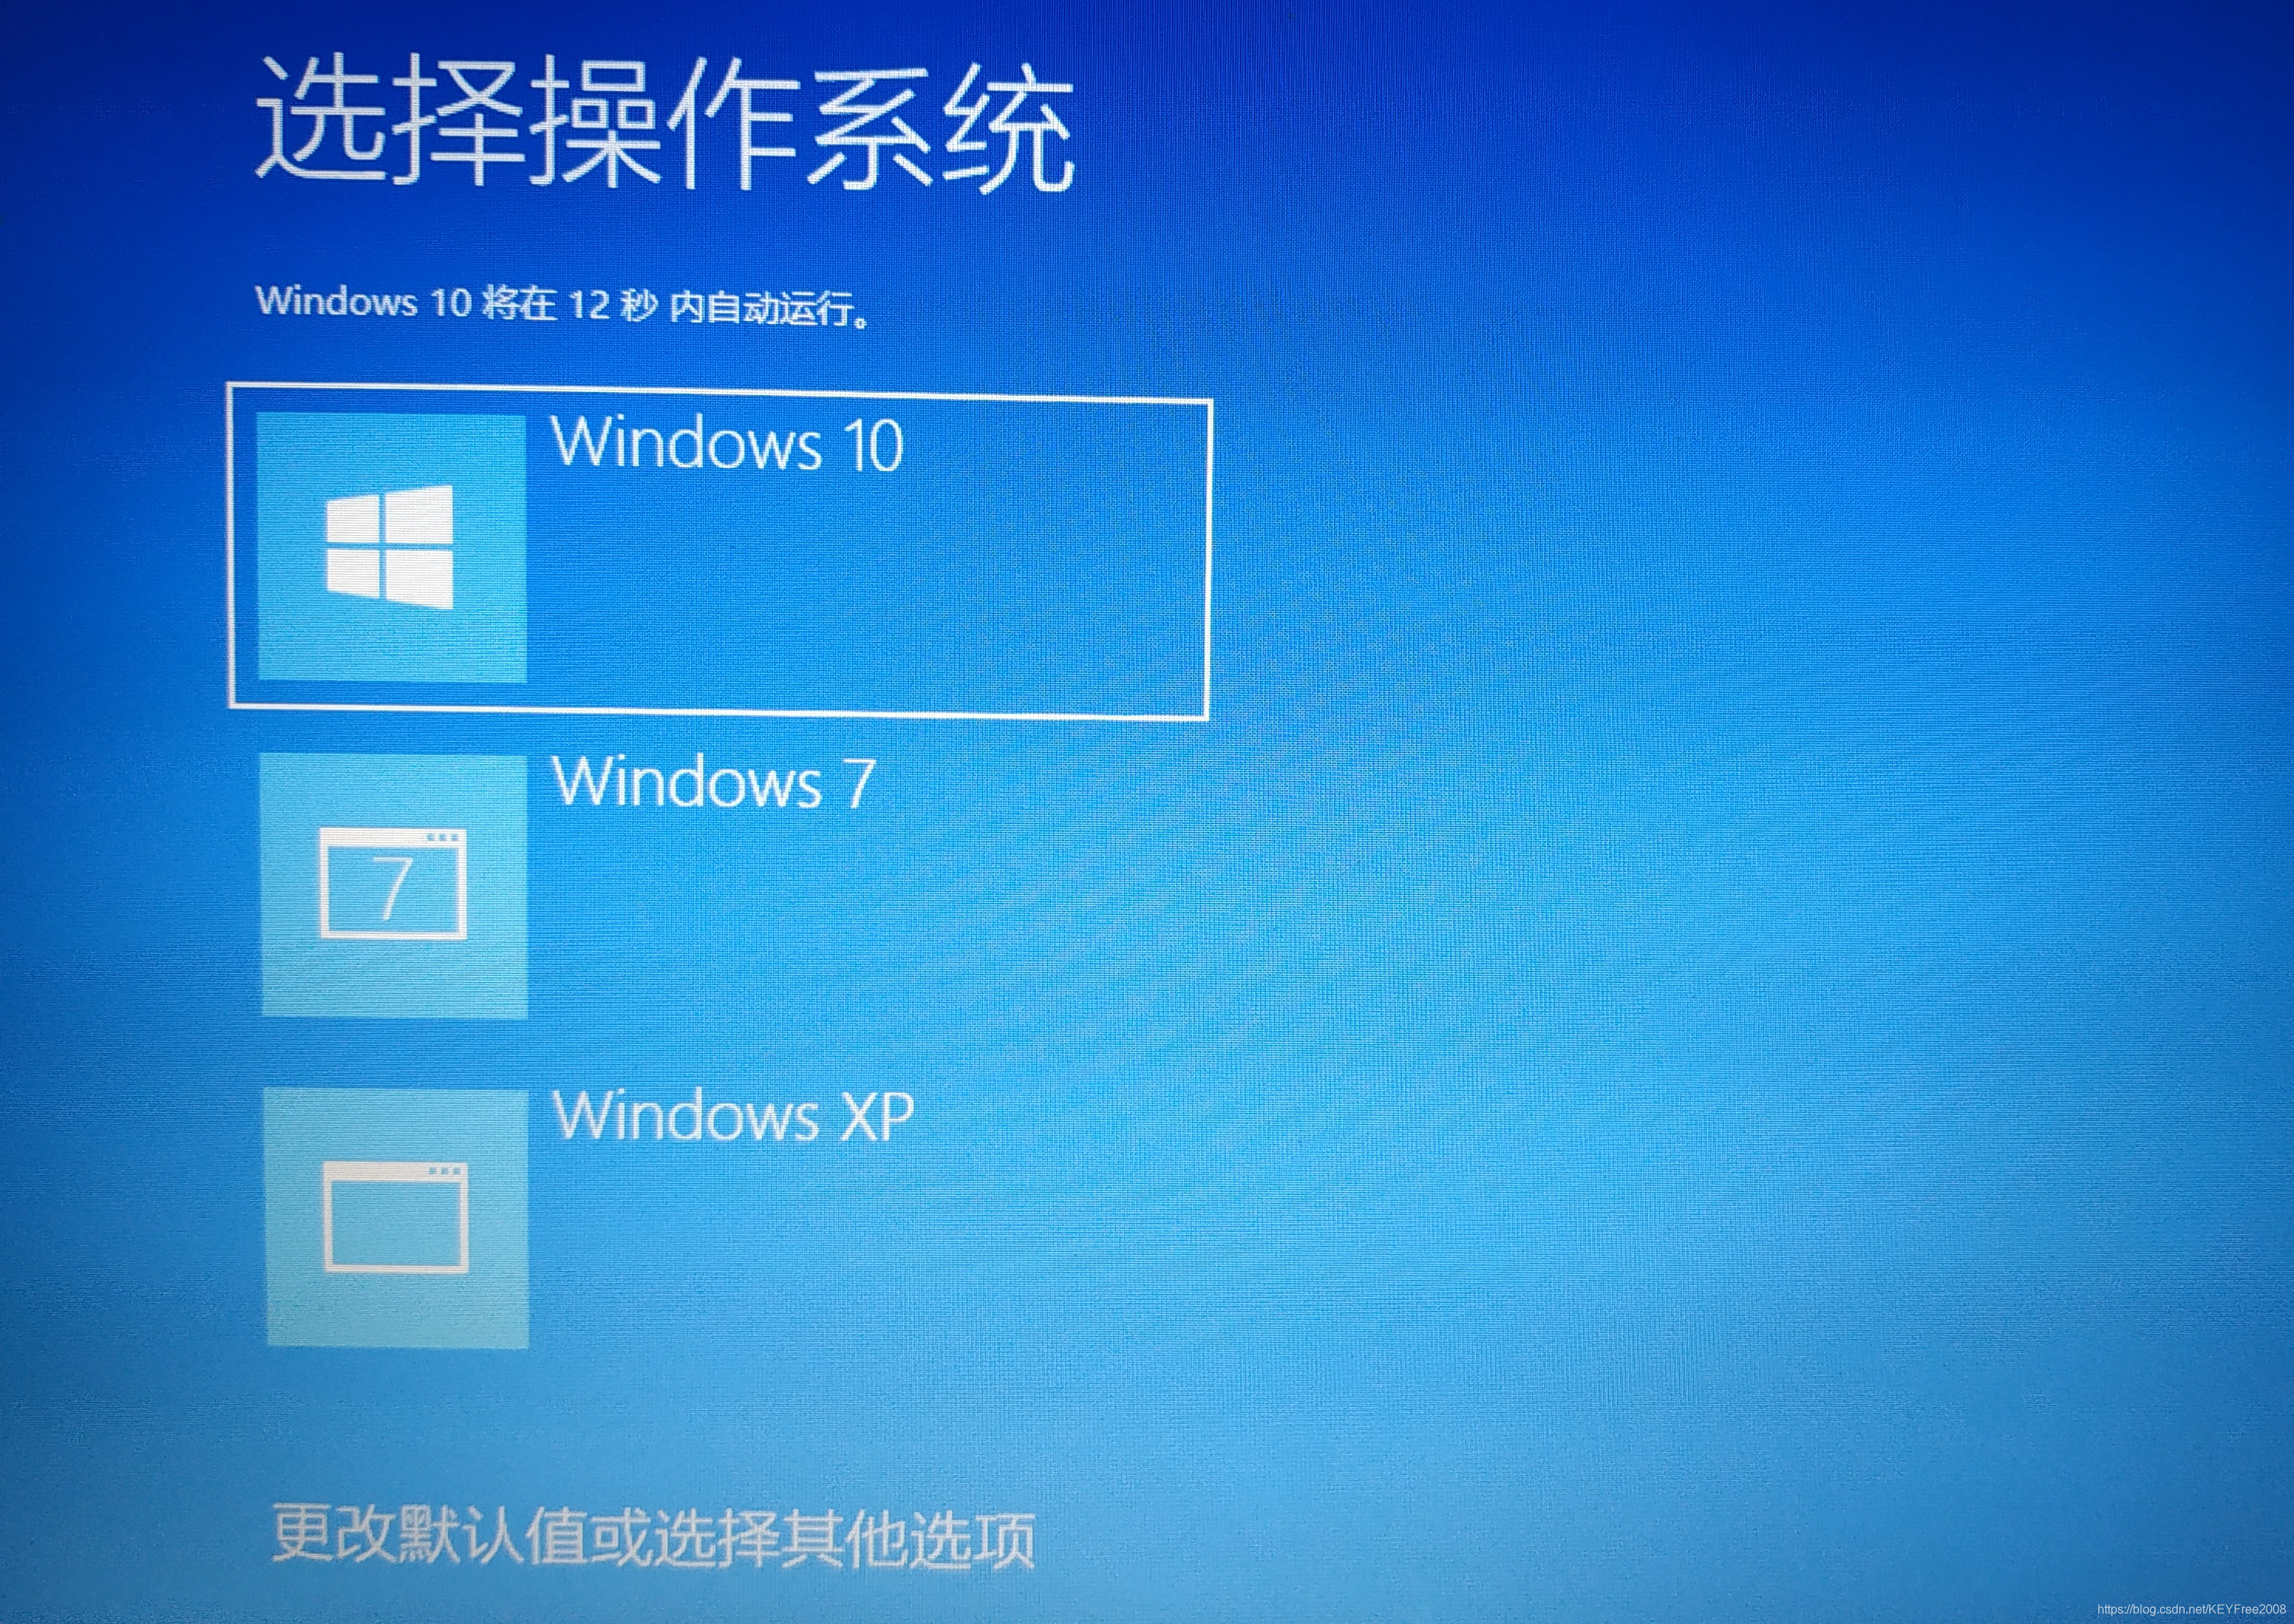 WindowsXP 系统虽已终止支持，但仍可在安卓设备上运行，快来体验吧  第2张